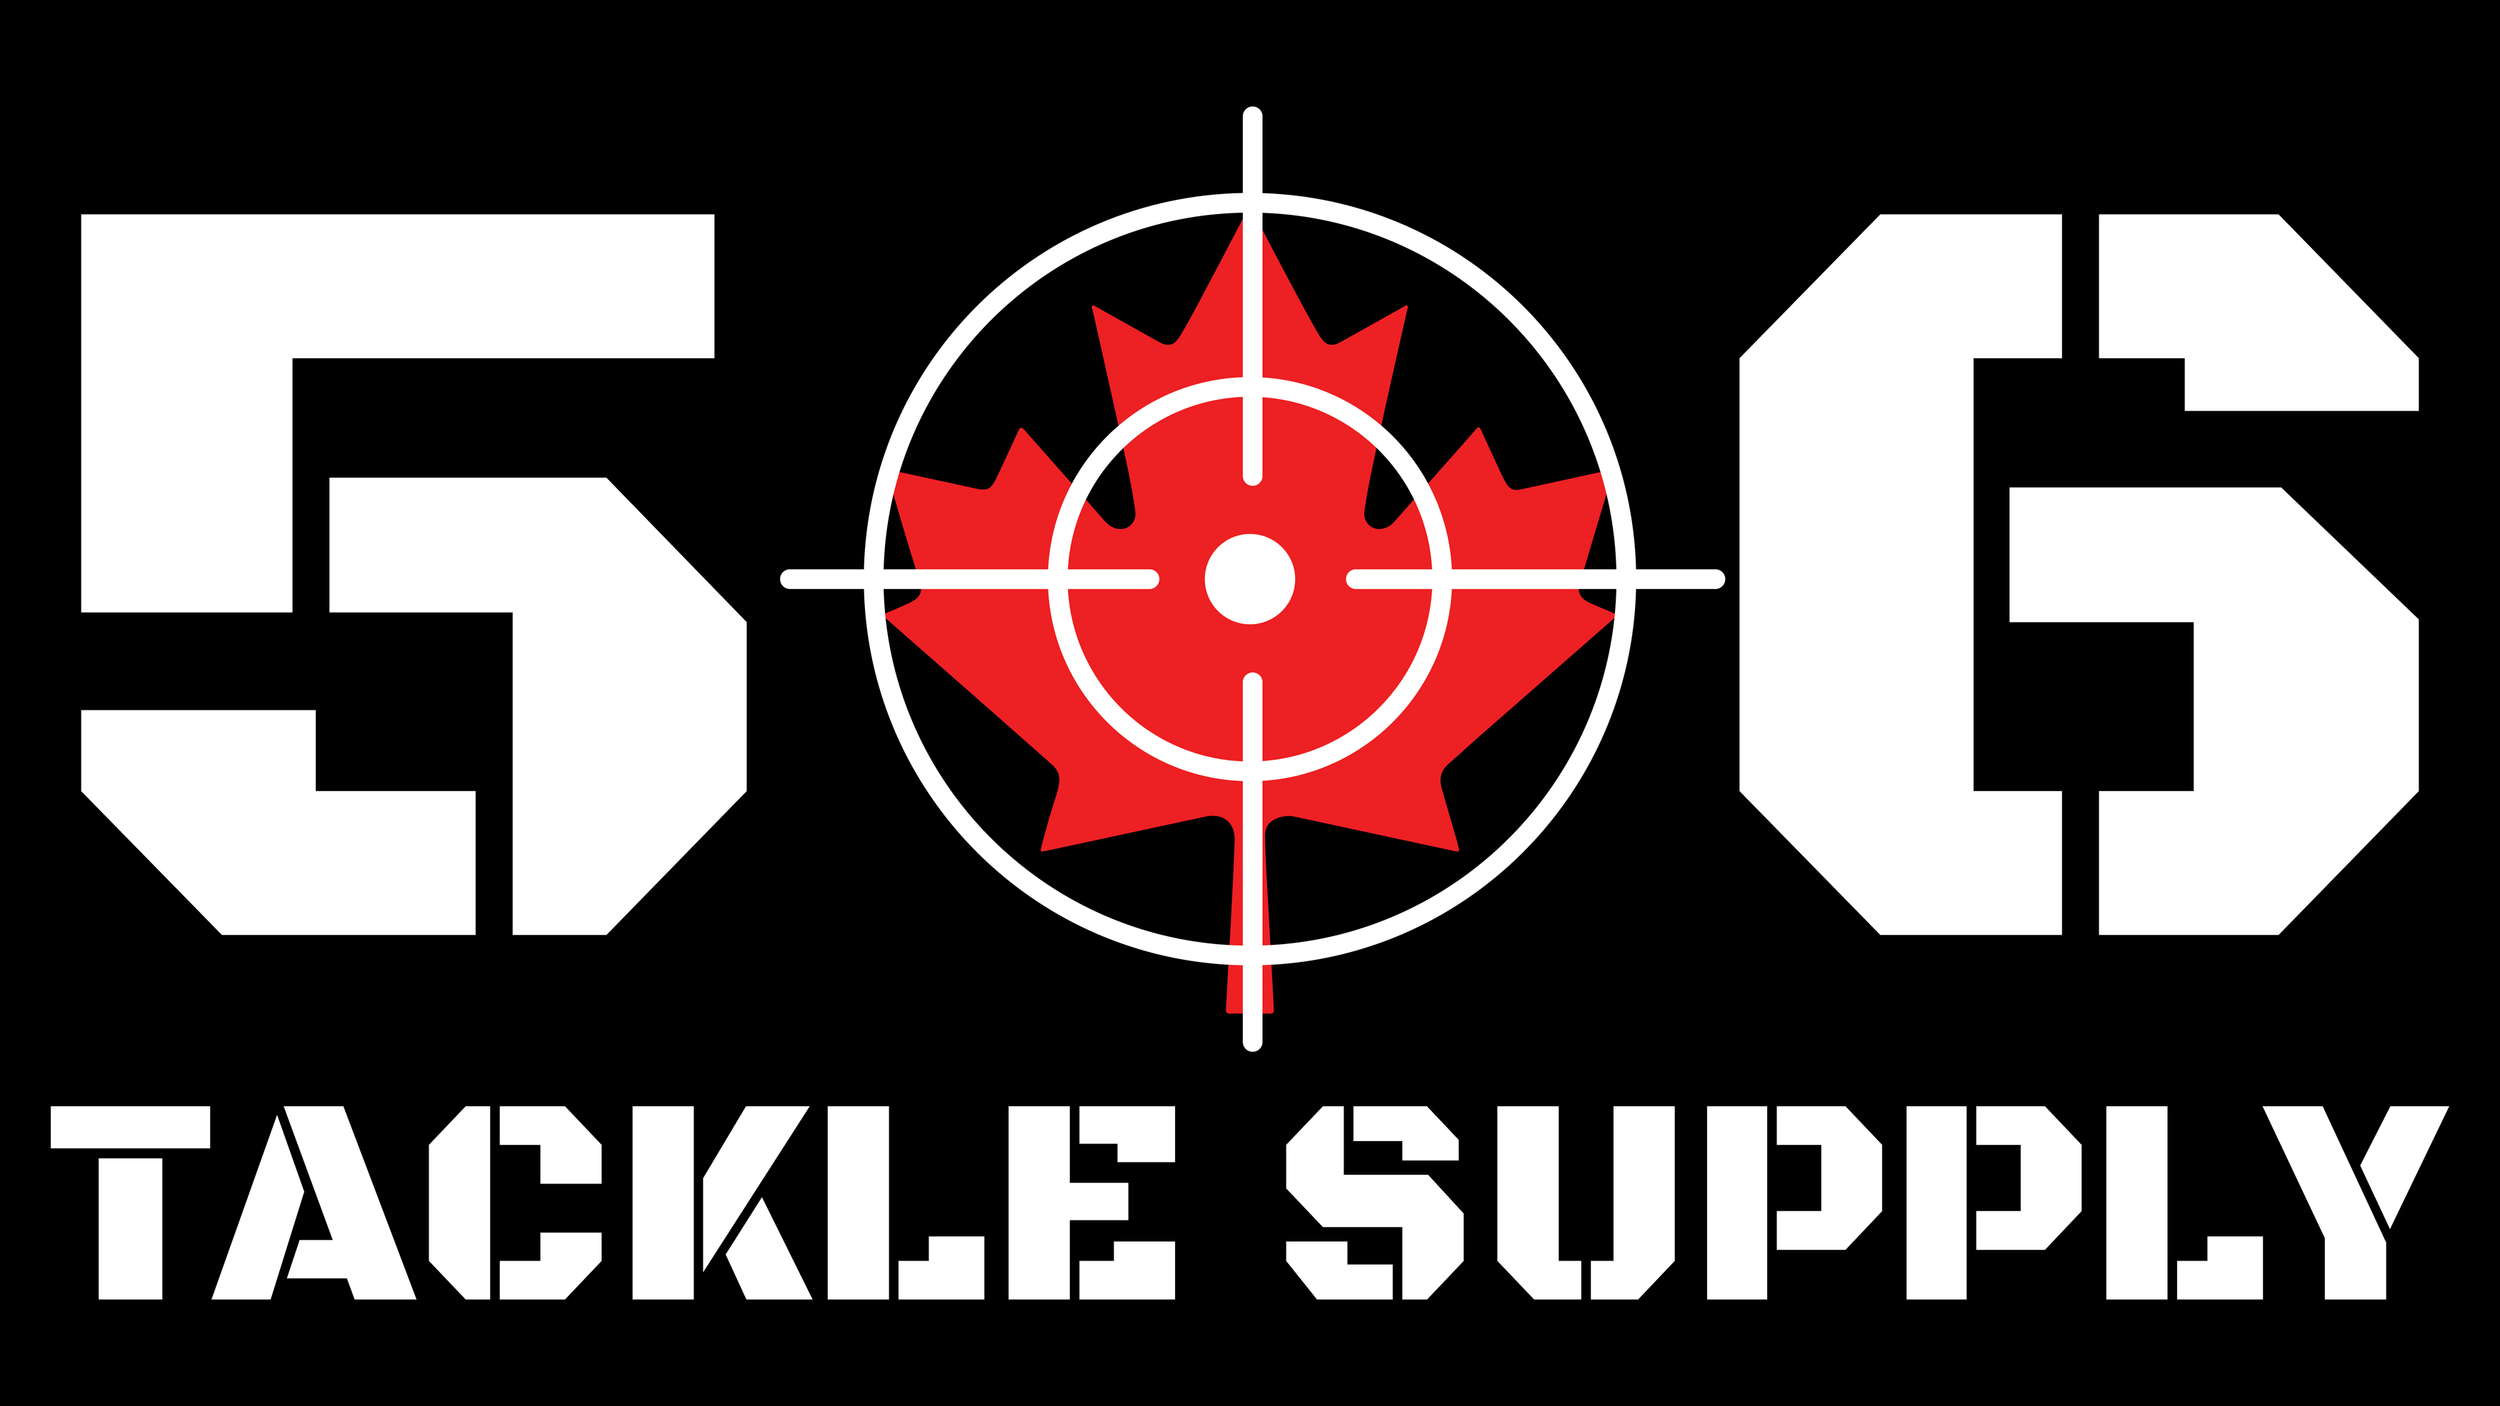 506 Tackle Supply